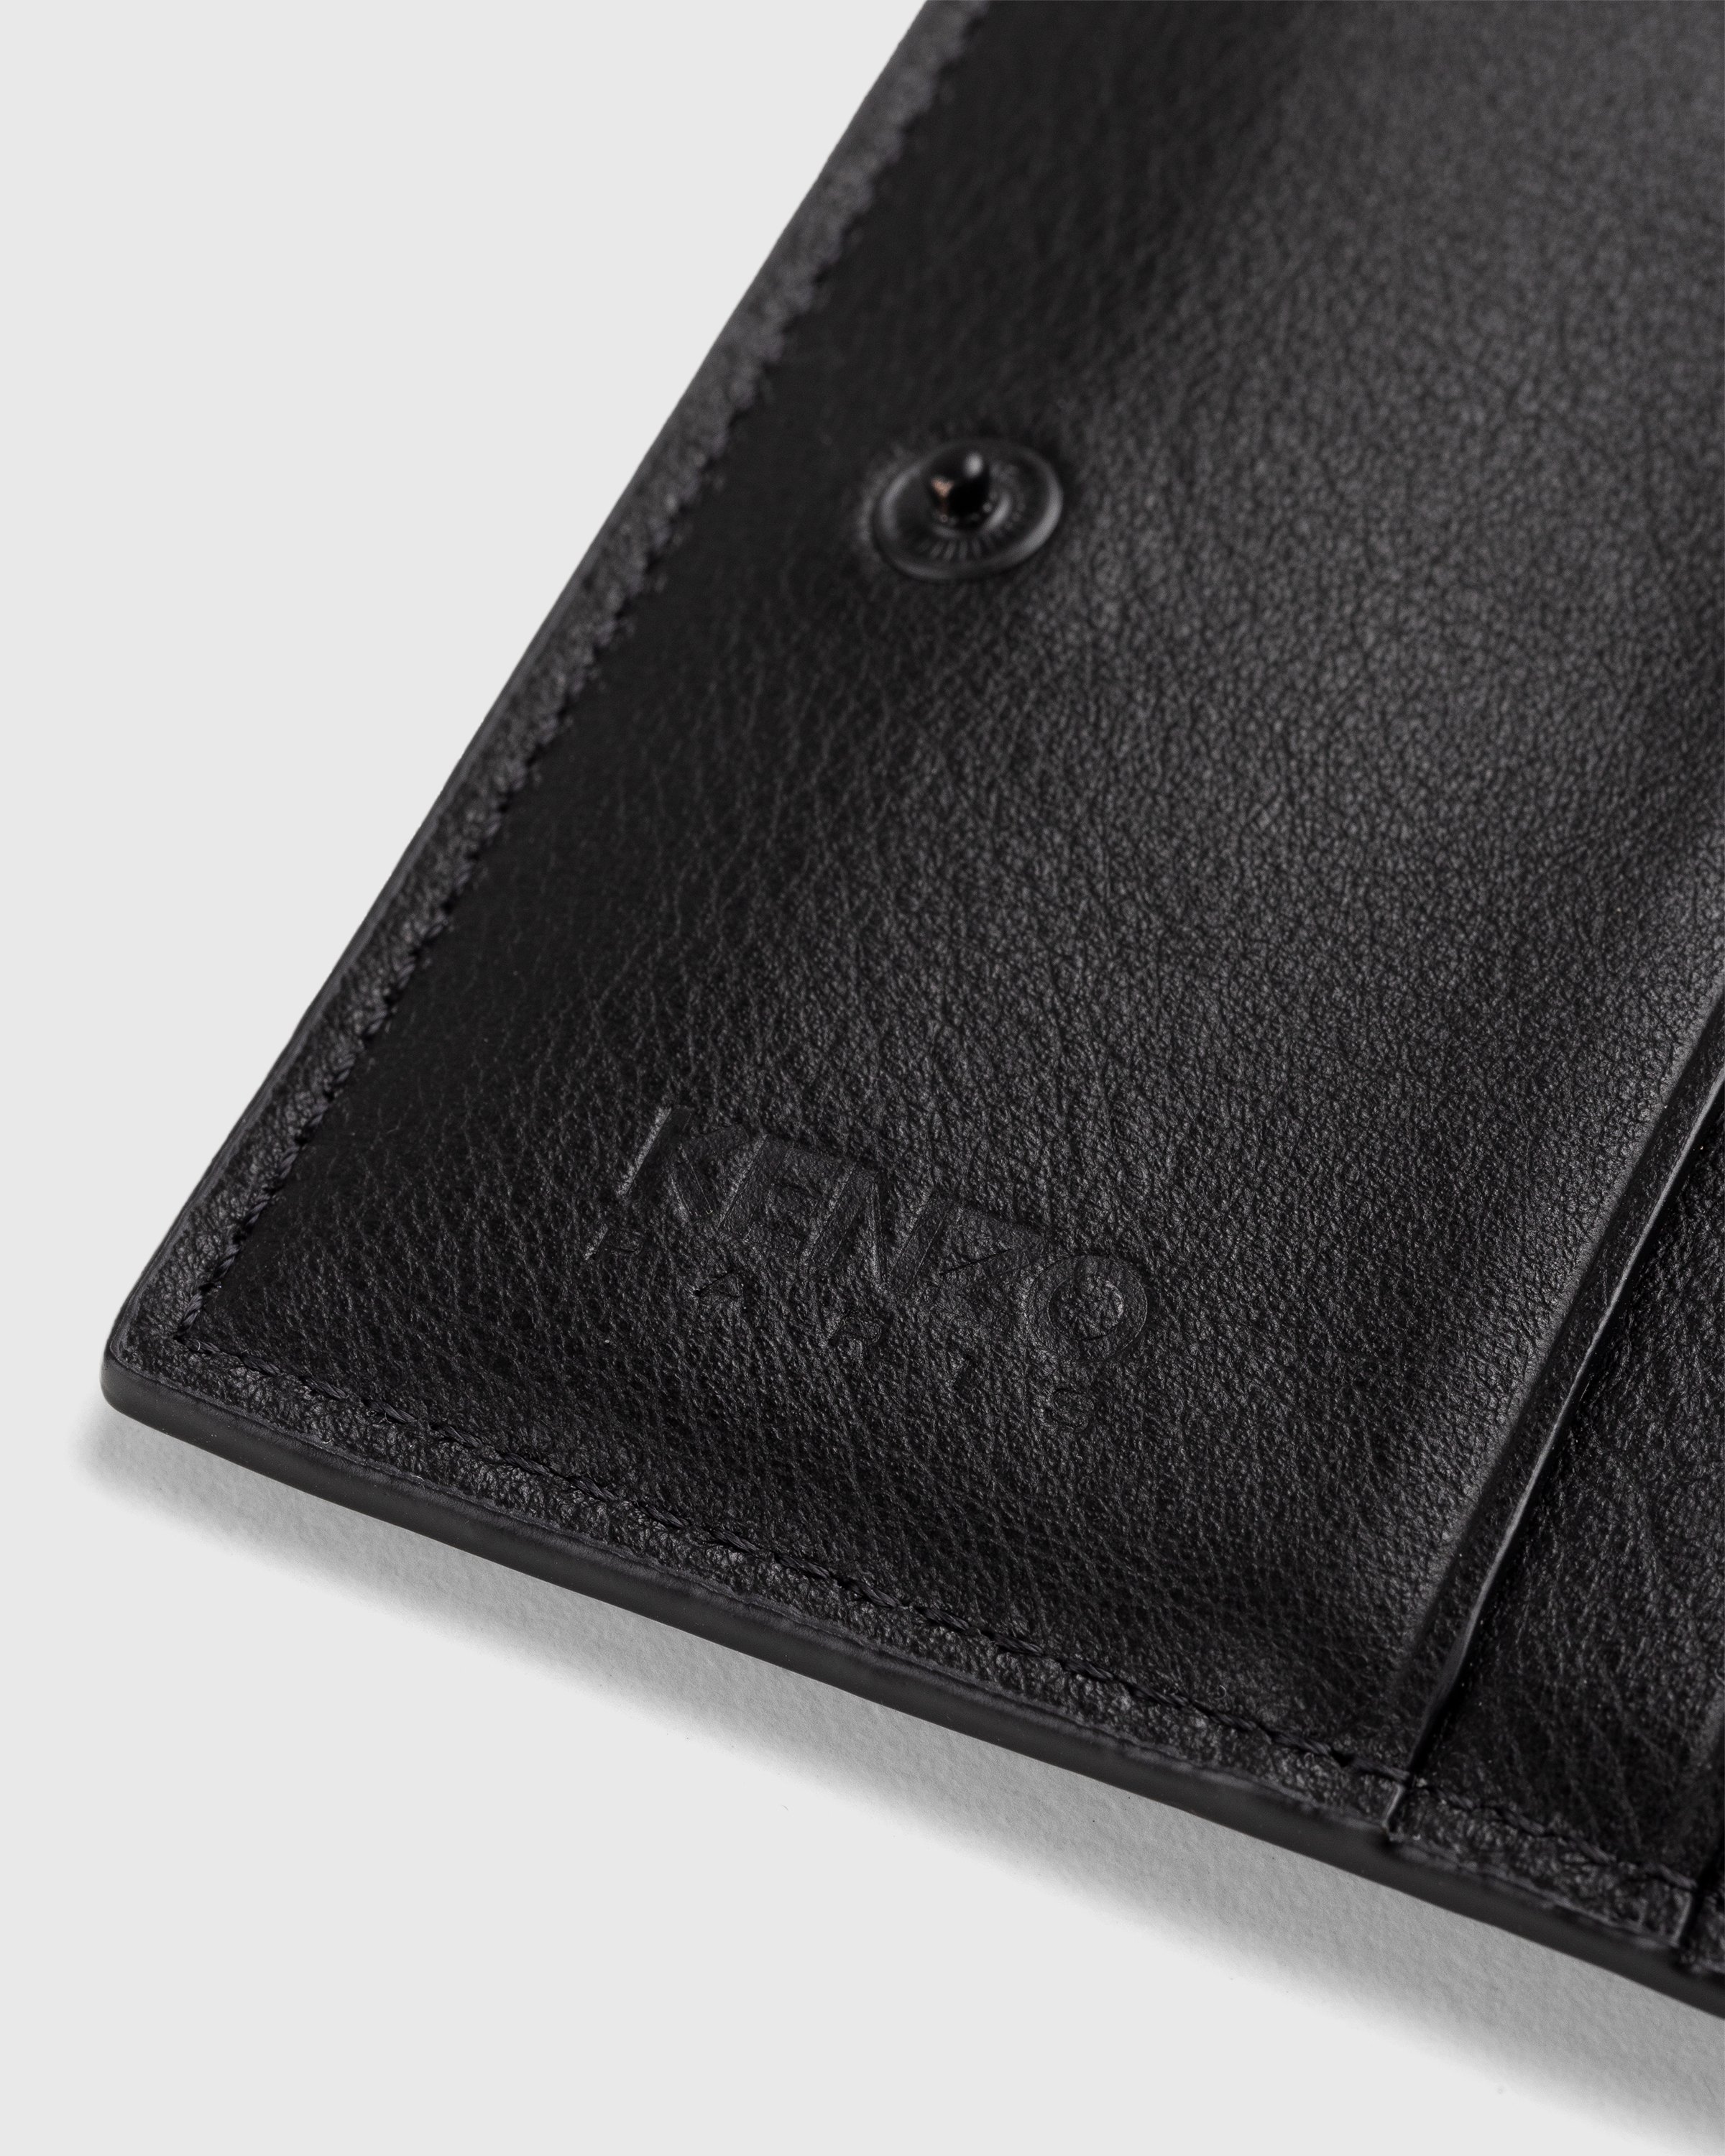 Kenzo - Crest Foldable Wallet Black - Accessories - Black - Image 4